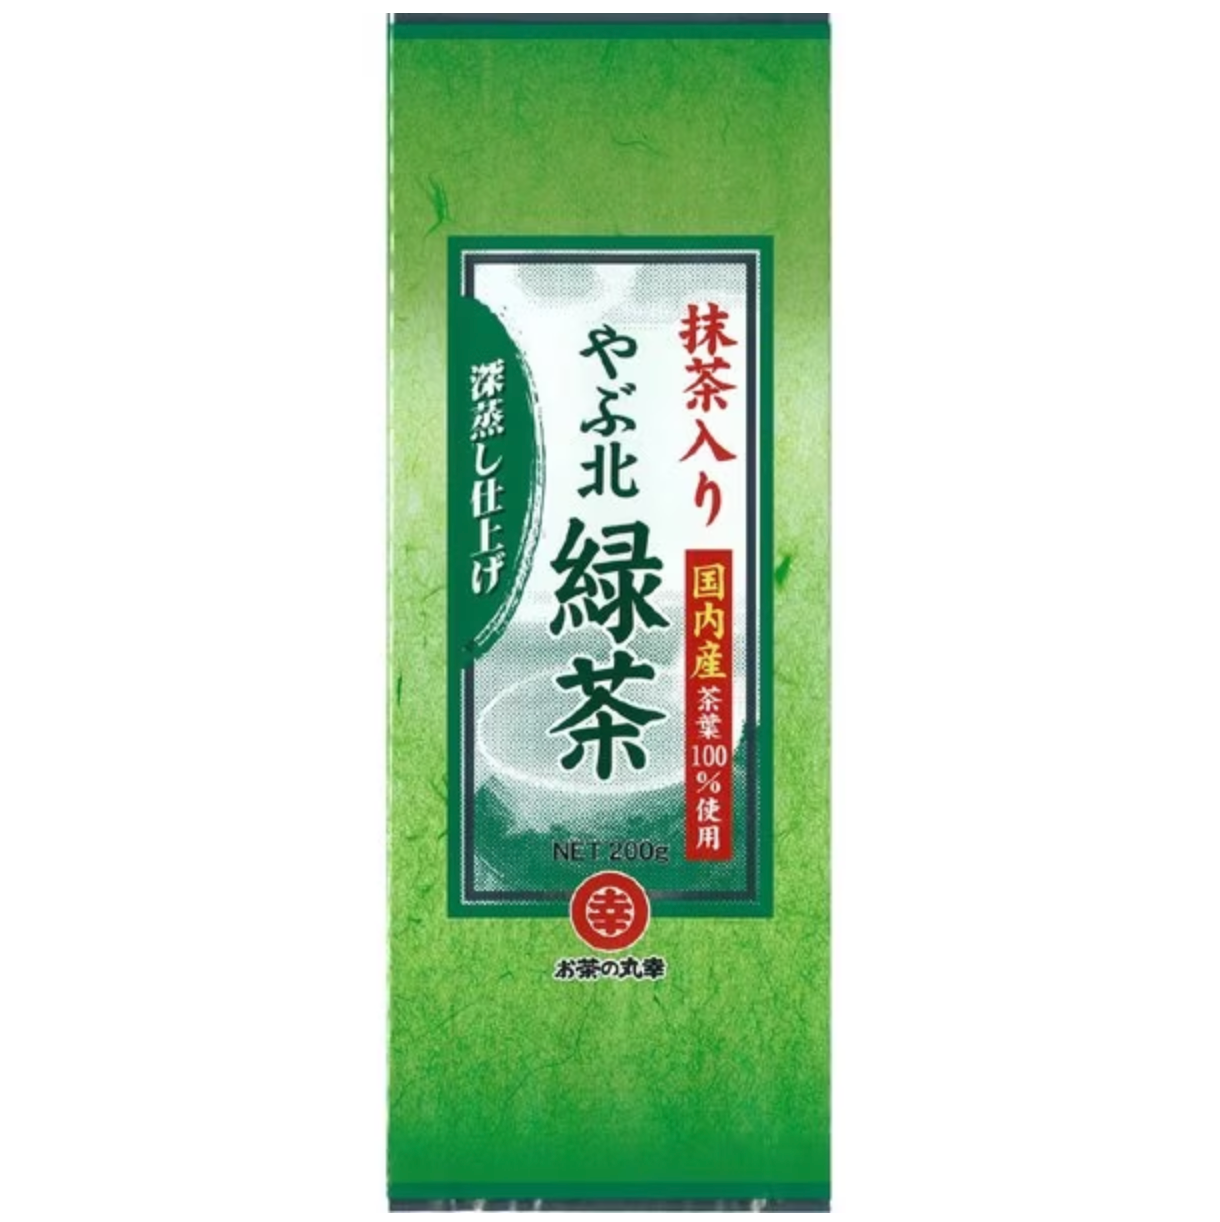 Ochanomaruko Yabu Kita Green Tea with Matcha 200g